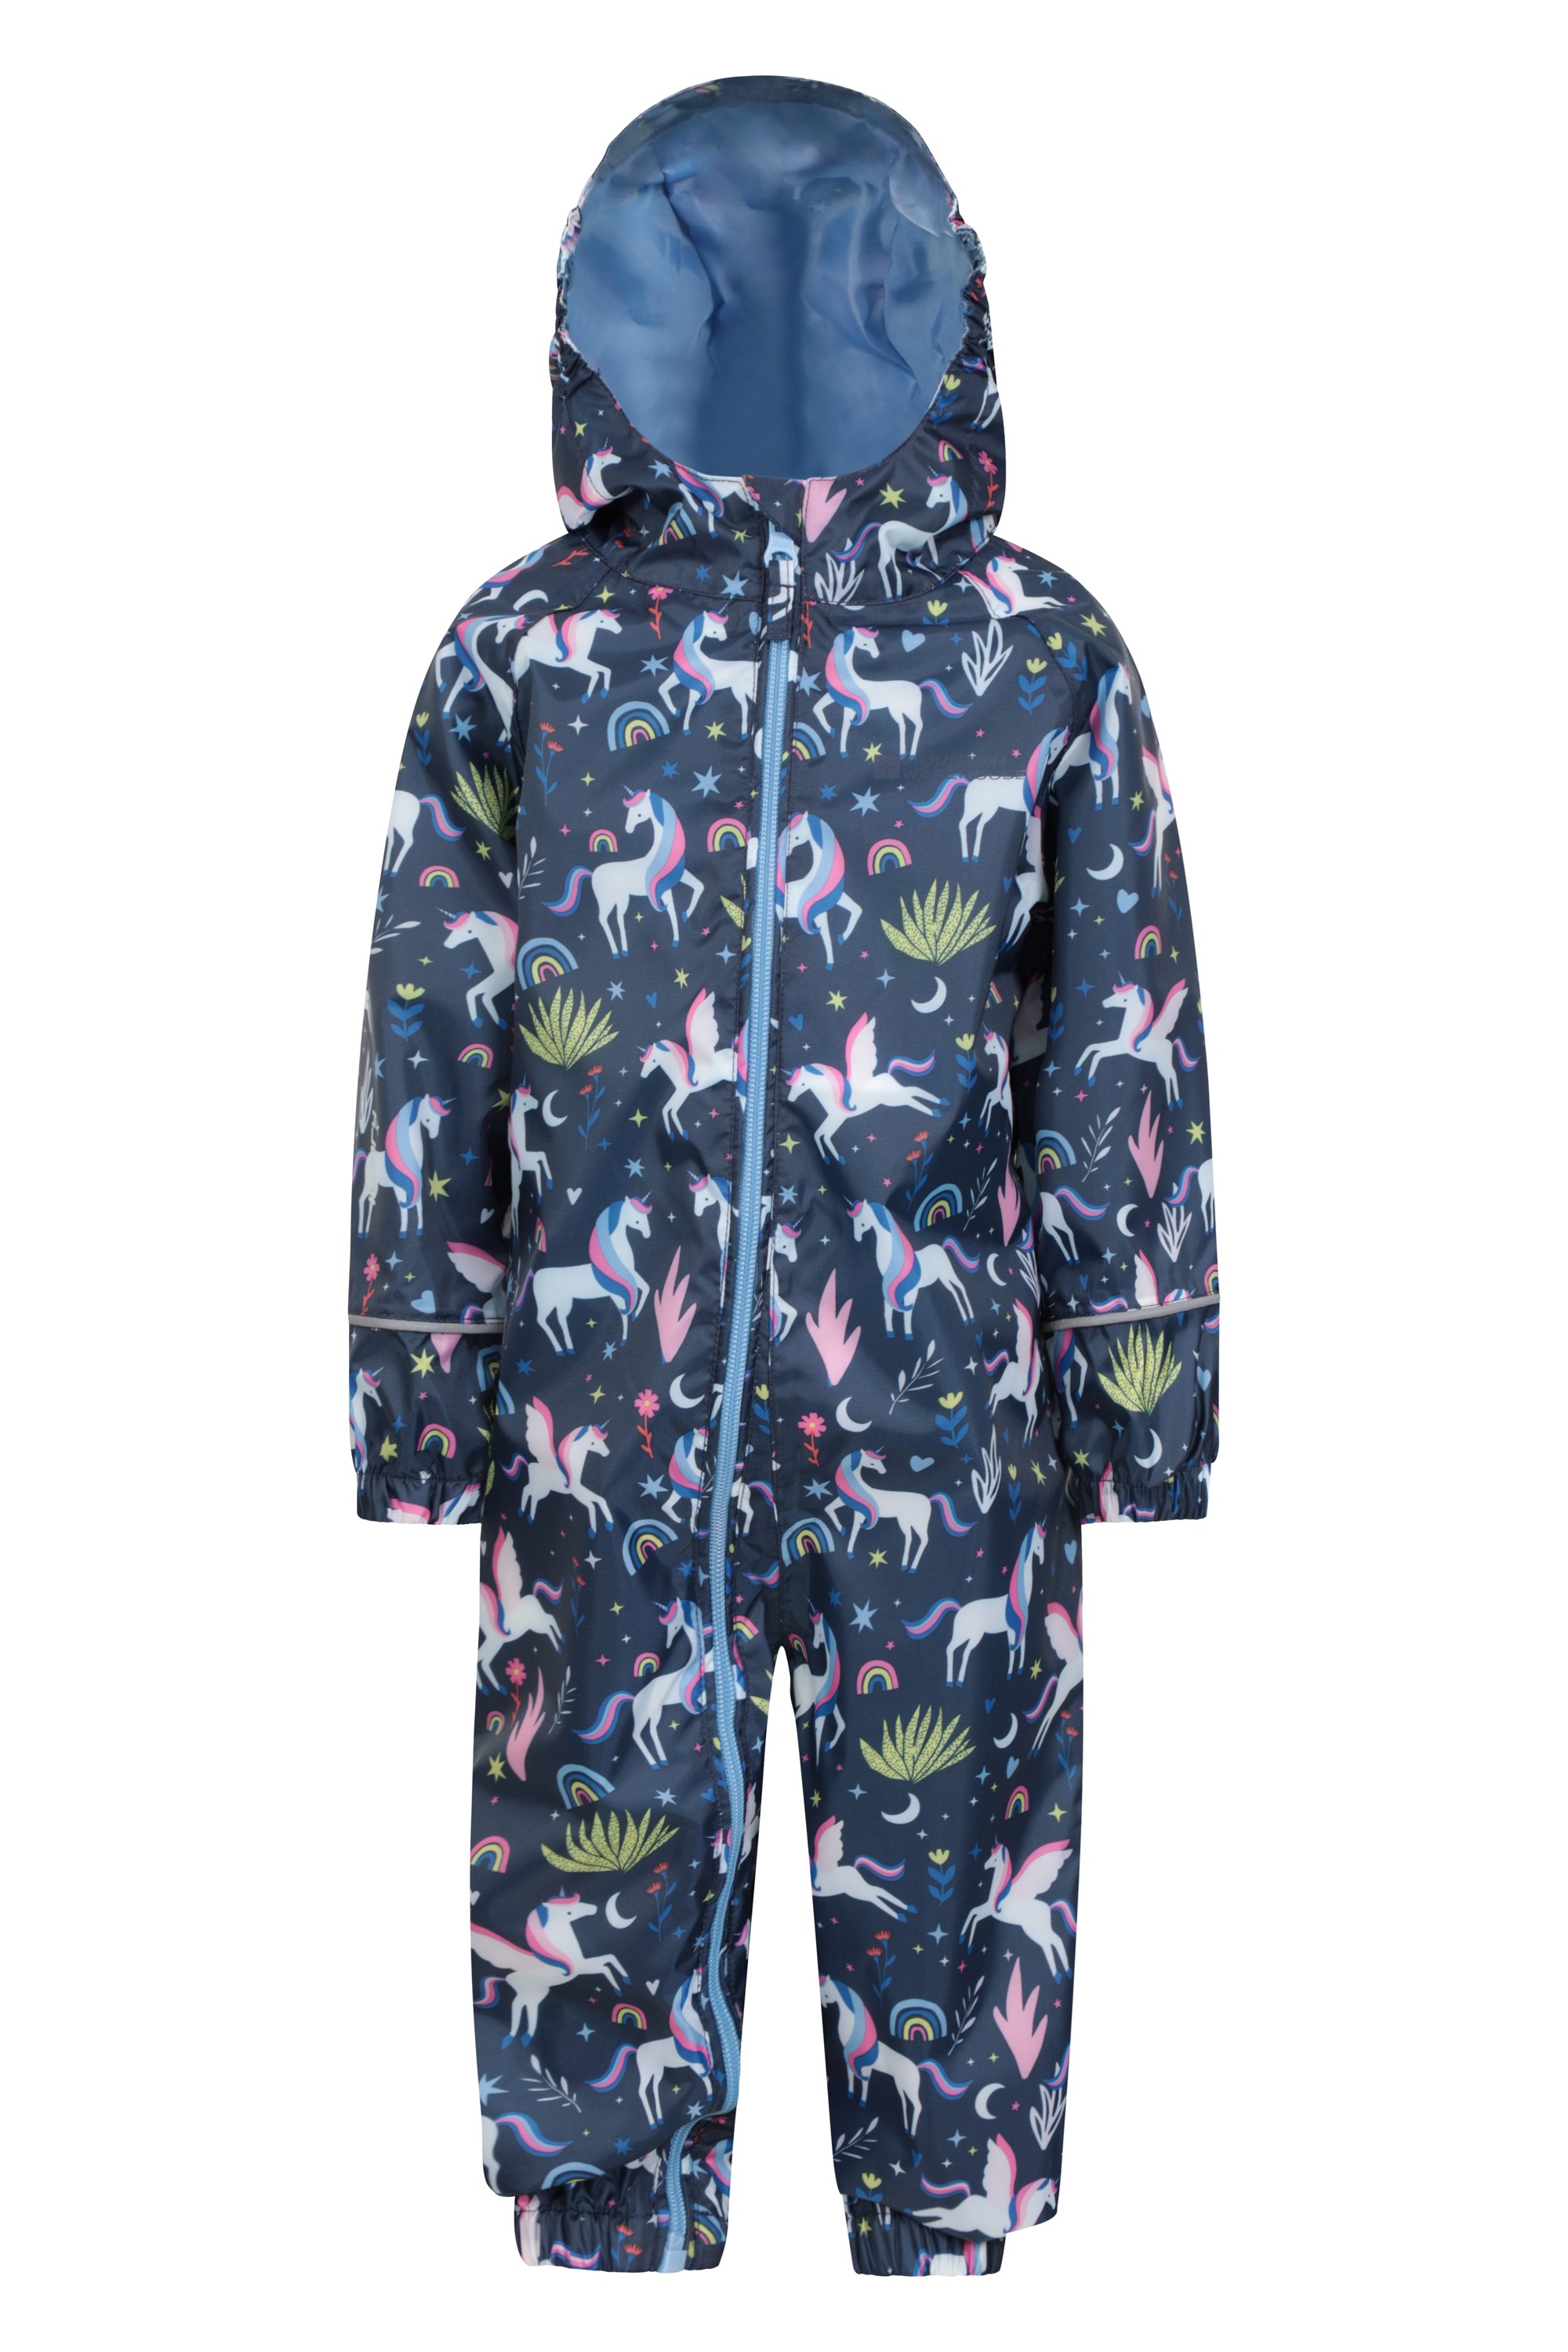 Waterproof Childrens Rain Coat Mountain Warehouse Puddle Kids Printed Rain Suit Taped Seams Suit Breathable Waterproof Coat High Vis Suit for Travelling 